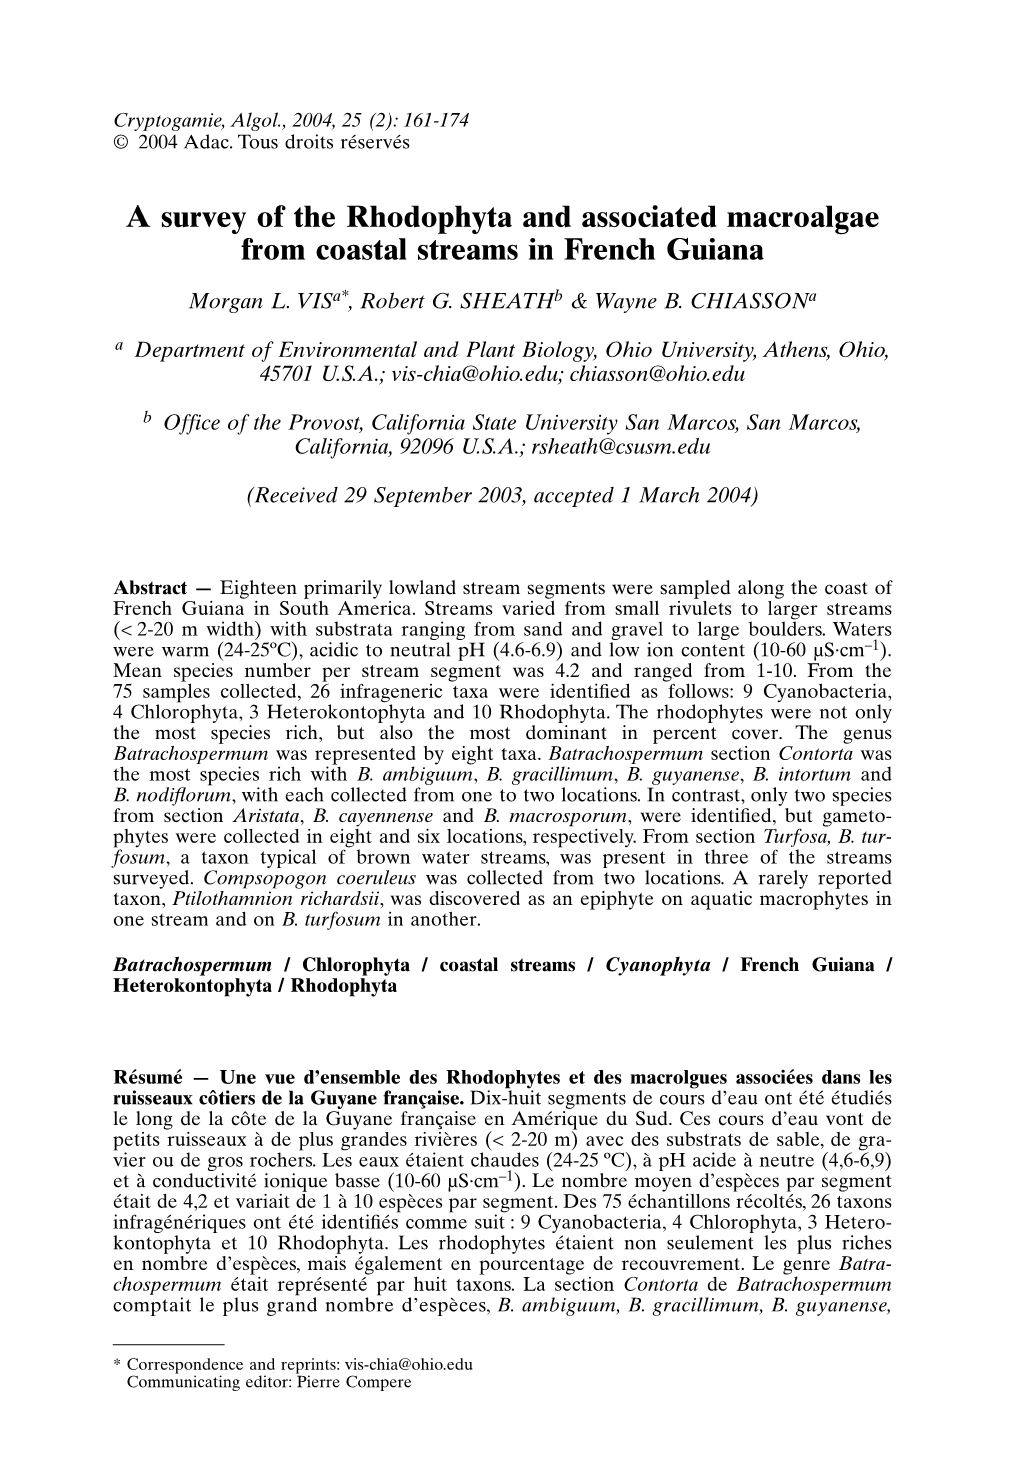 A Survey of the Rhodophyta and Associated Macroalgae from Coastal Streams in French Guiana